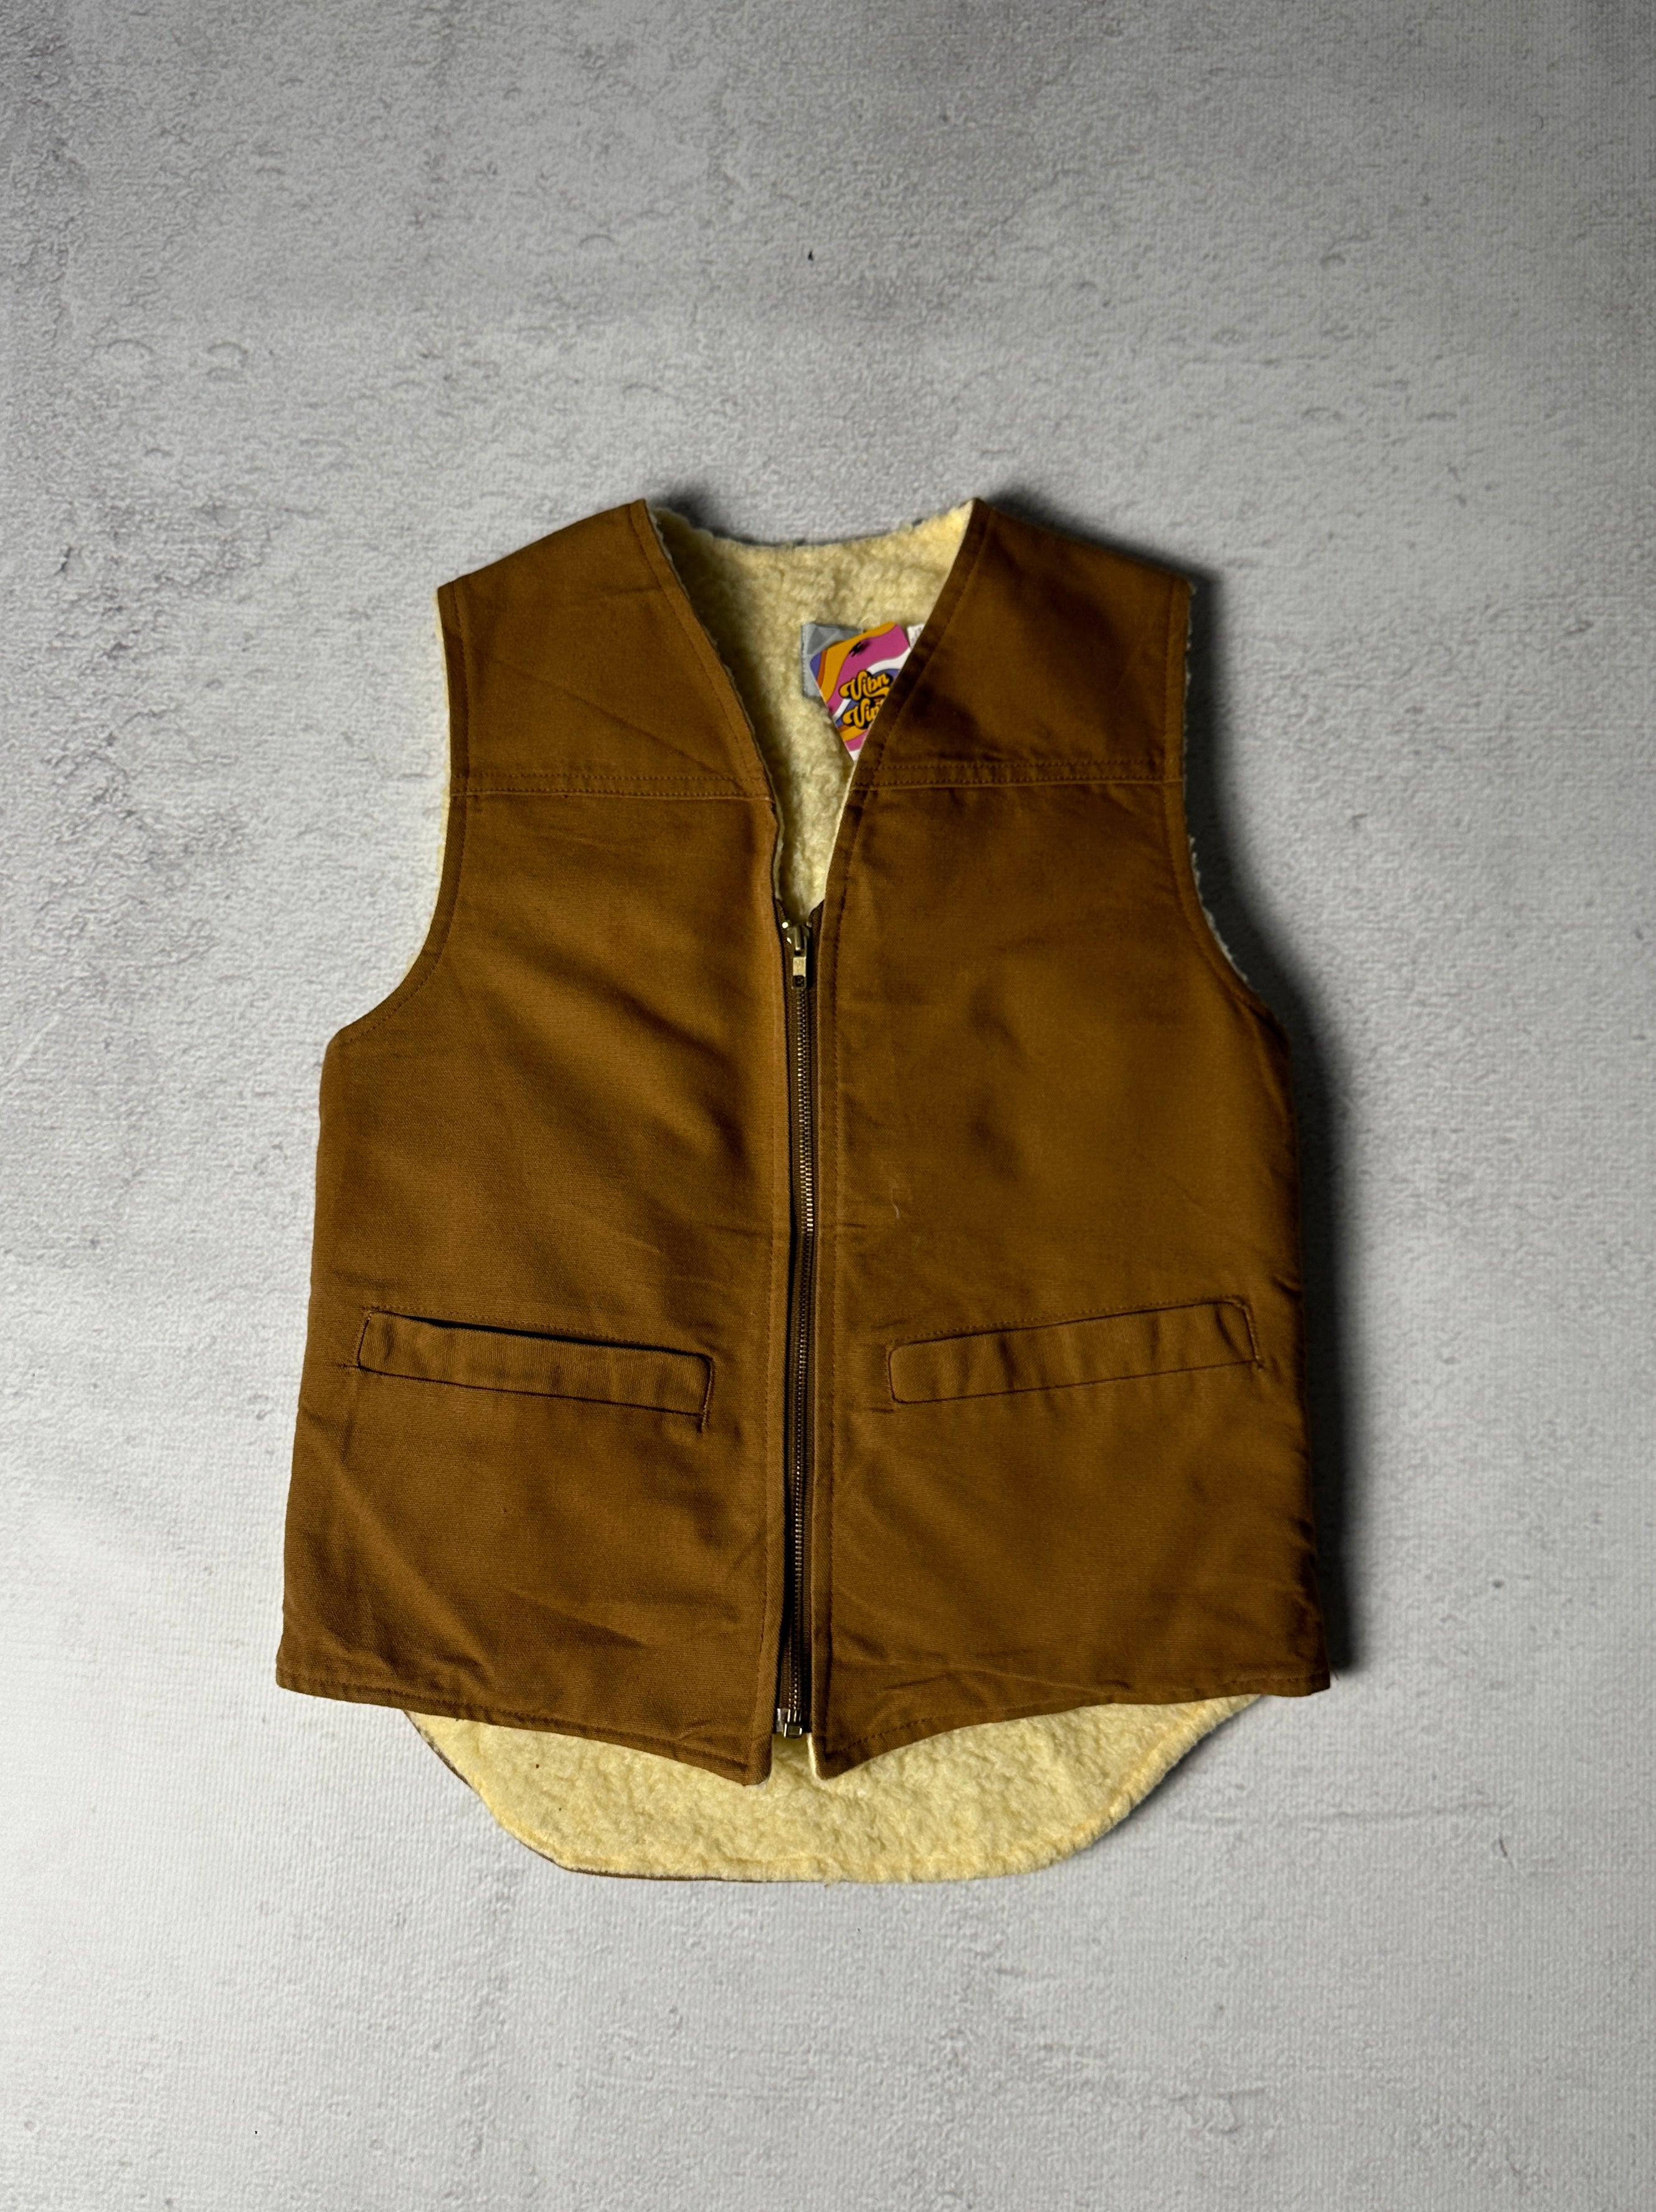 Vintage Carhartt Sherpa Lined Denim Vest - Men's Small